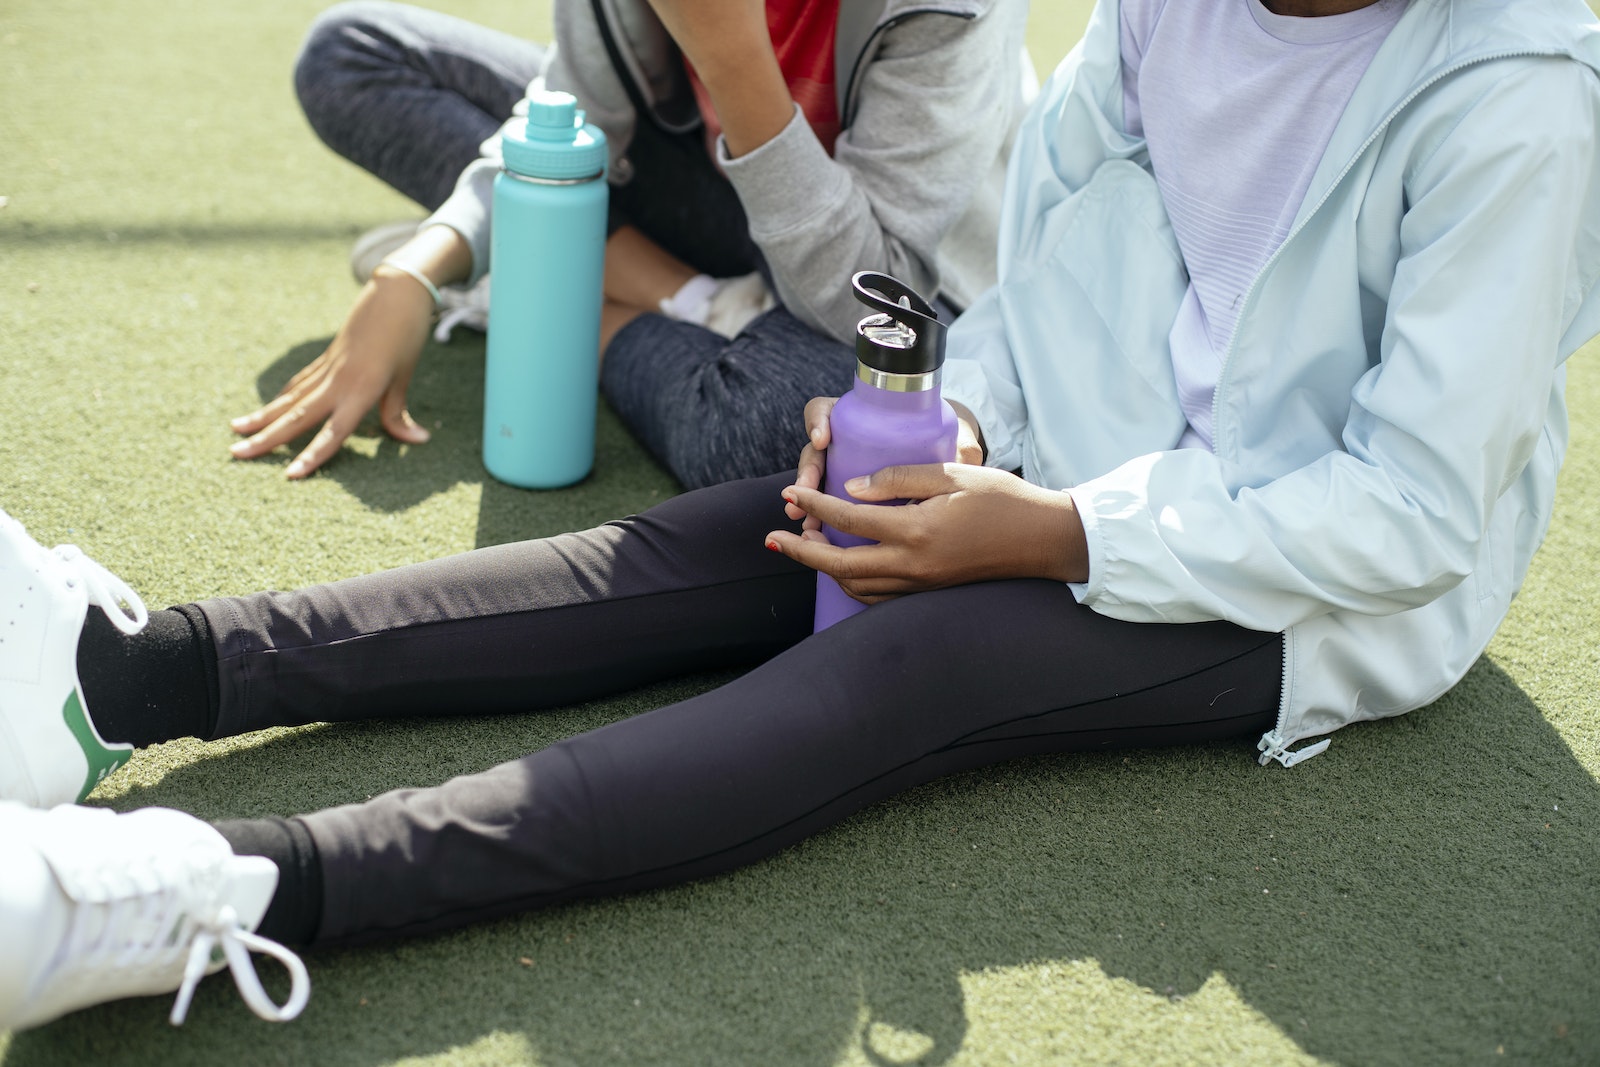 Crop schoolgirls with plastic water bottles sitting on artificial grass field while having break in training